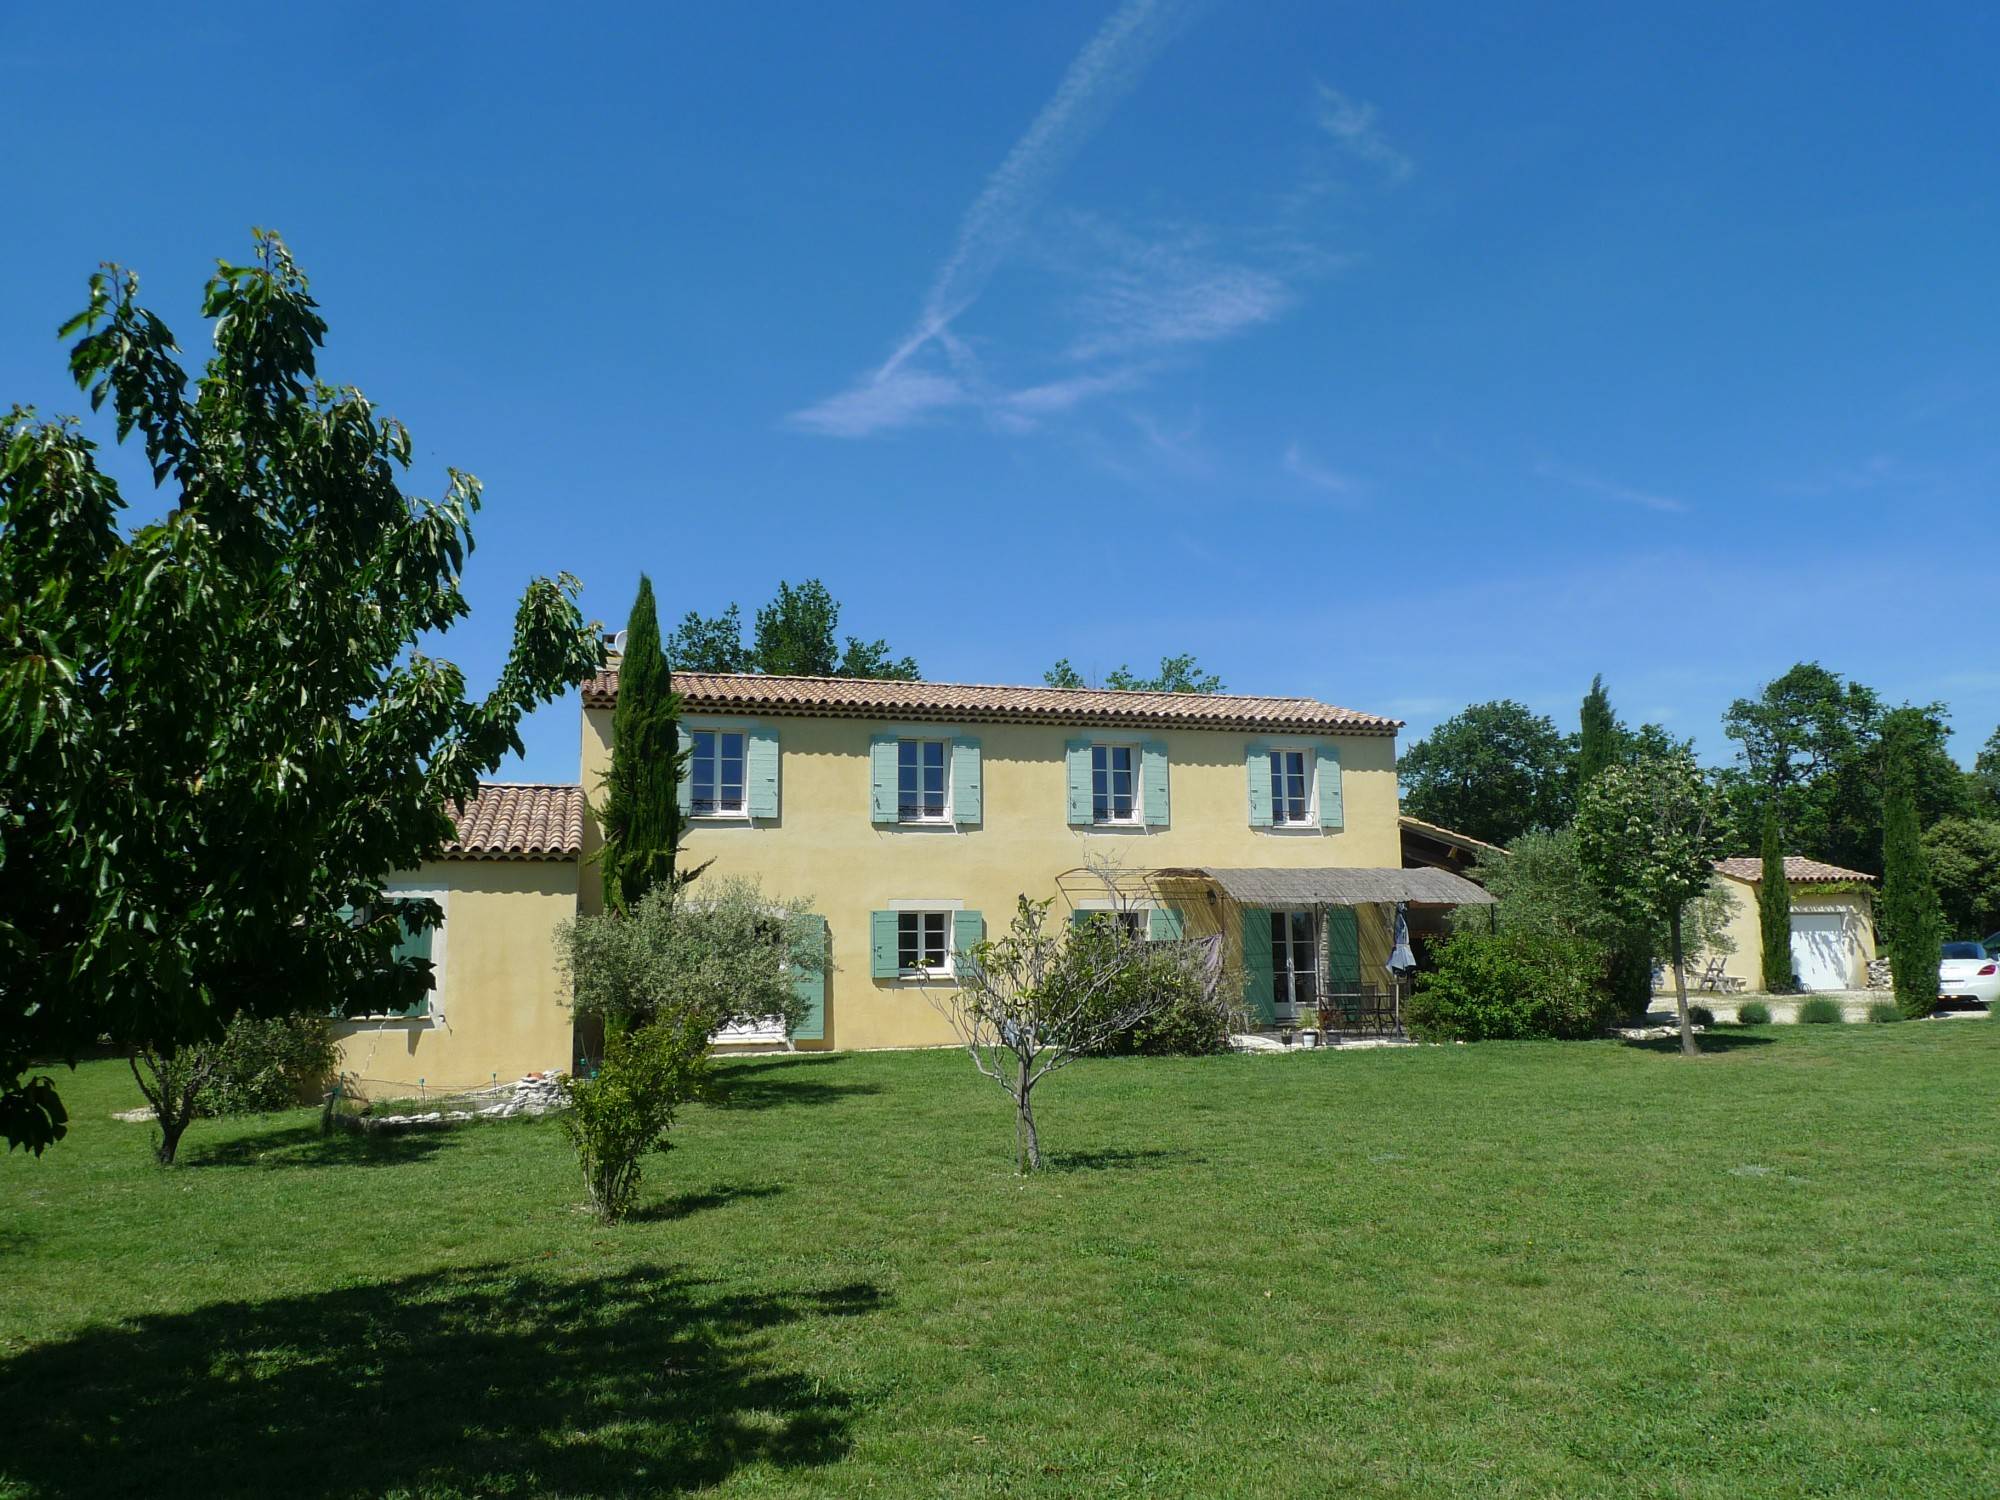  Villa  dans bel environnement - A 7km de Grignan